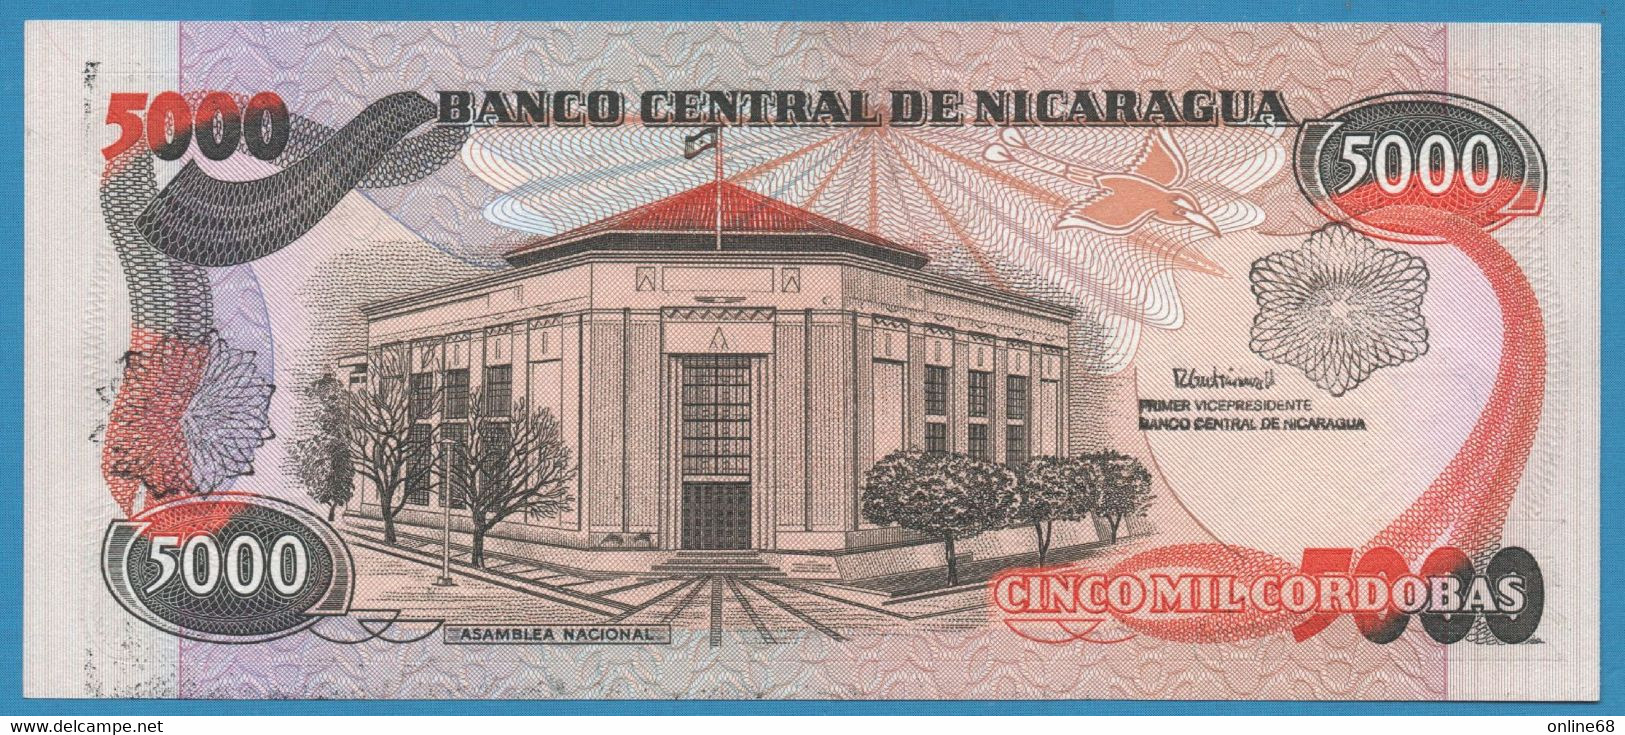 NICARAGUA 5000 CORDOBAS 1988 # G 69010744 P# 157 General Benjamin Zeledon Revalidation - Nicaragua